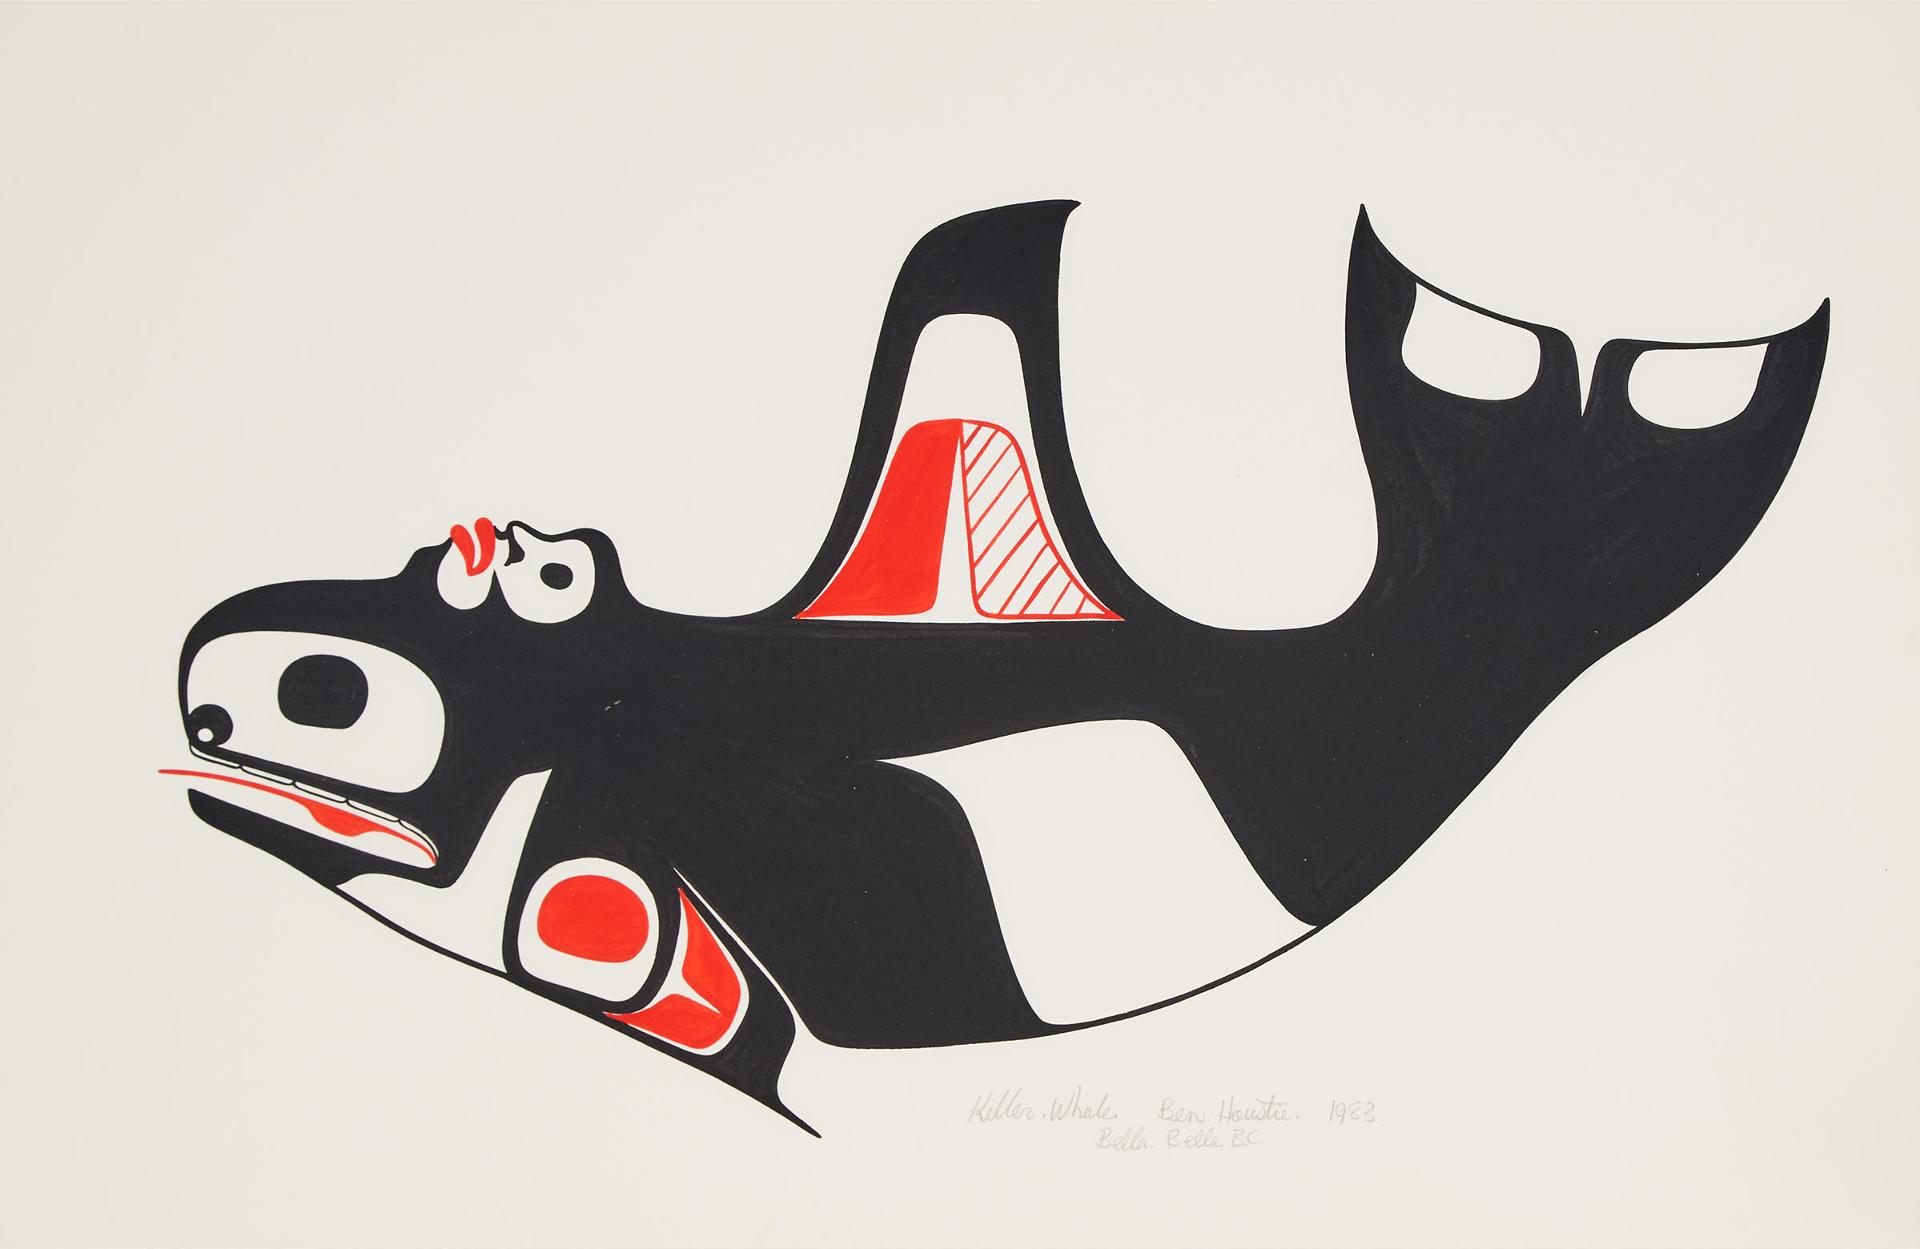 Ben Houstie (1960) - Killer Whale, 1983